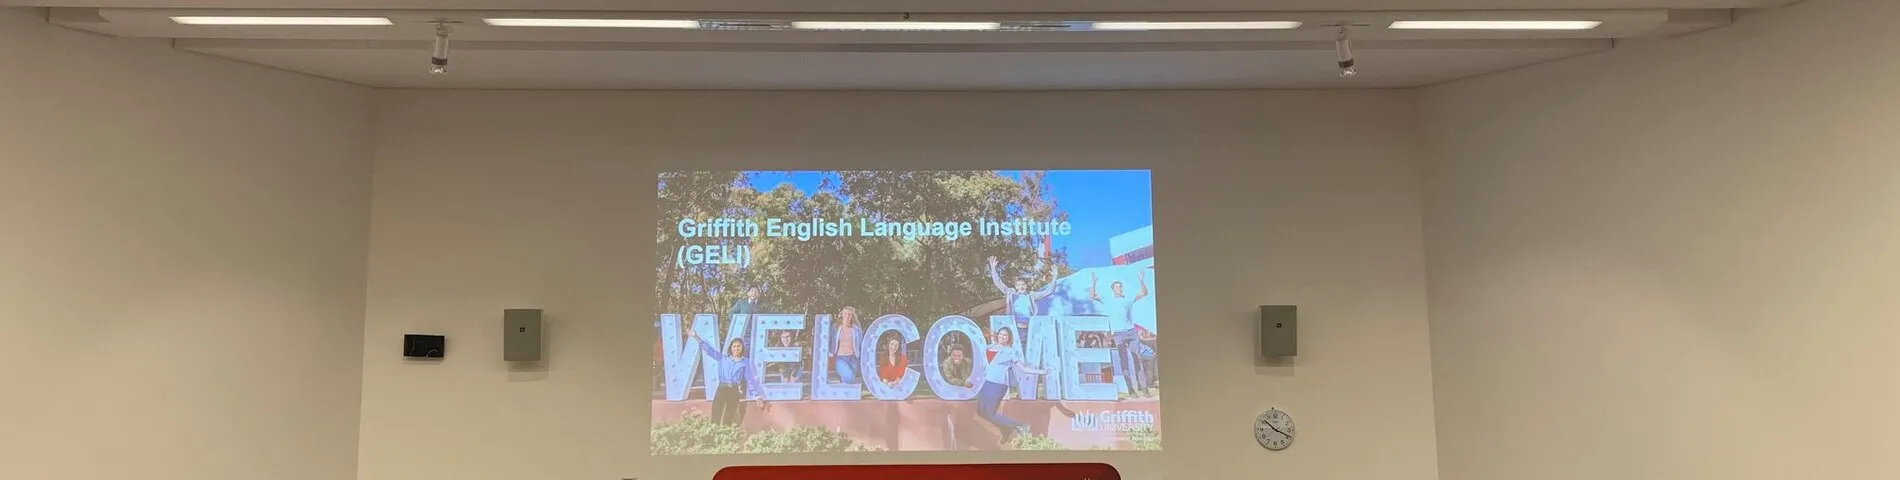 Griffith English Language Institute afbeelding 1